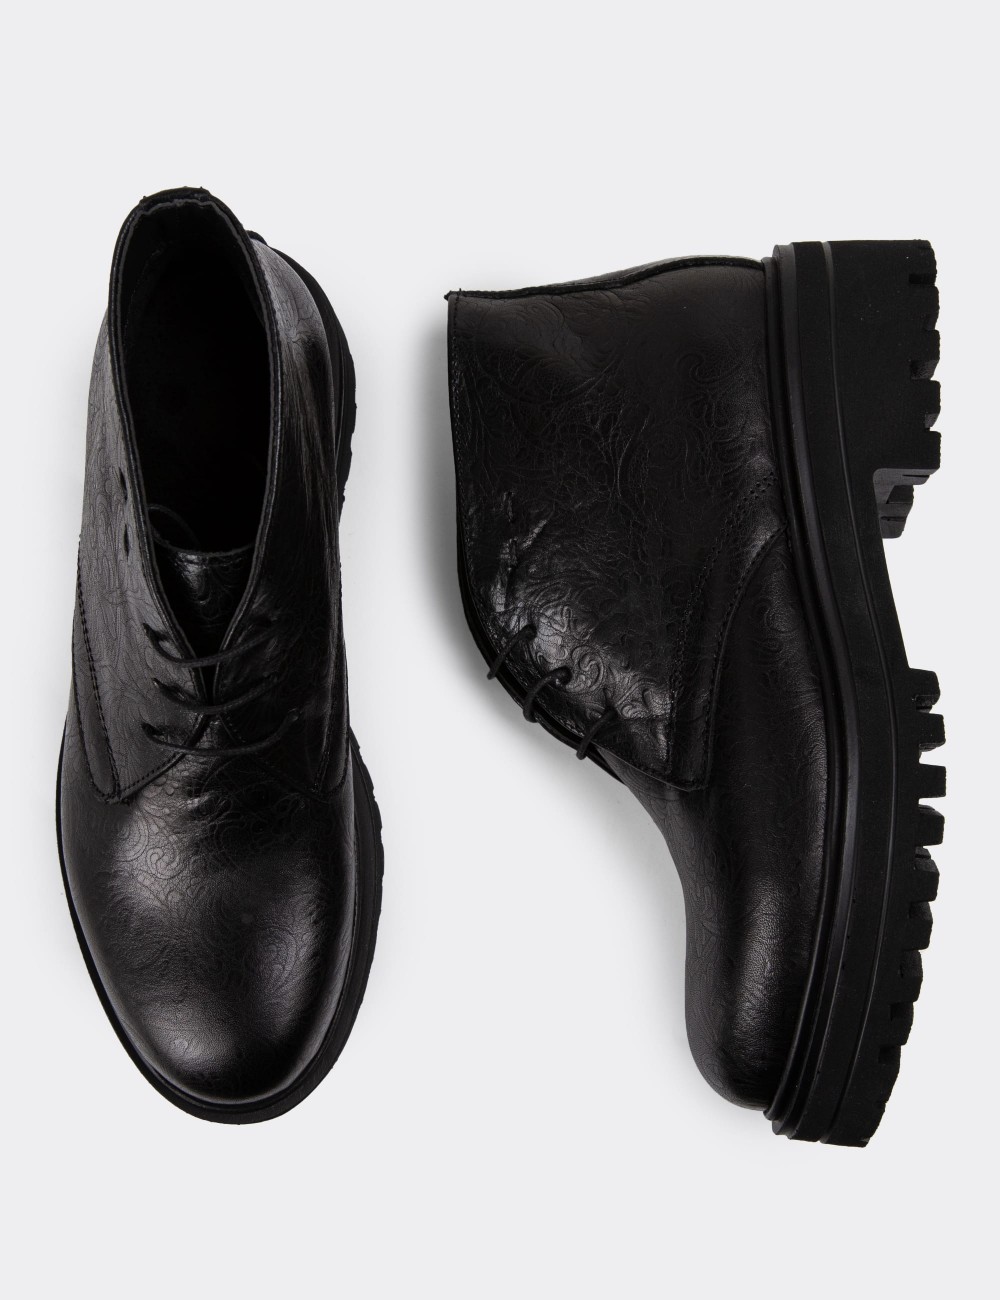 Black Leather Desert Boots - 01847ZSYHE04